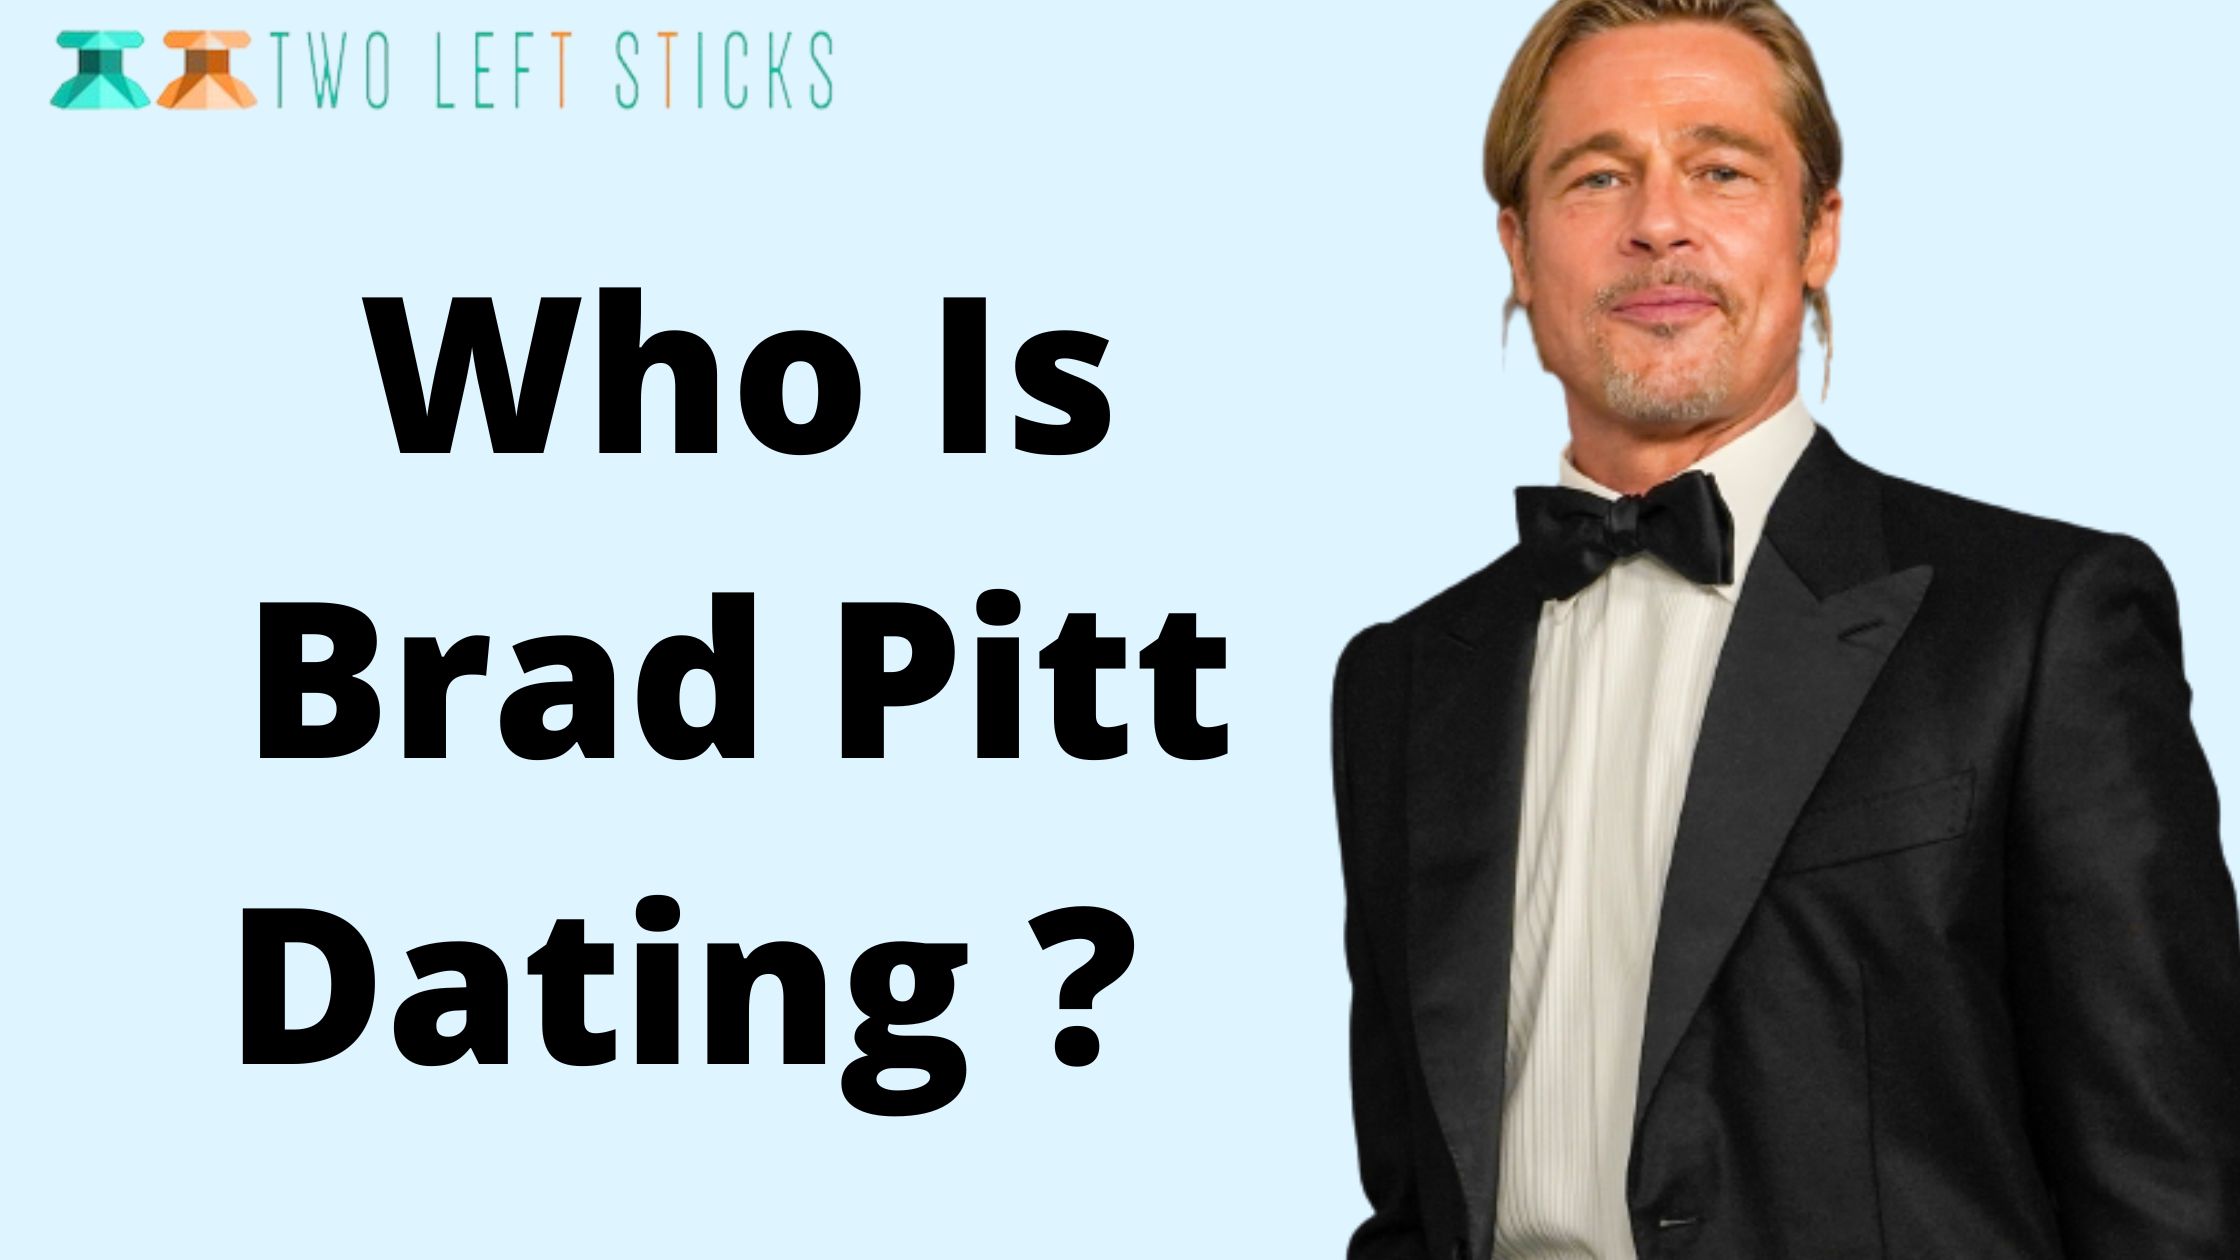 Brad-Pitt-twoleftsticks(1)